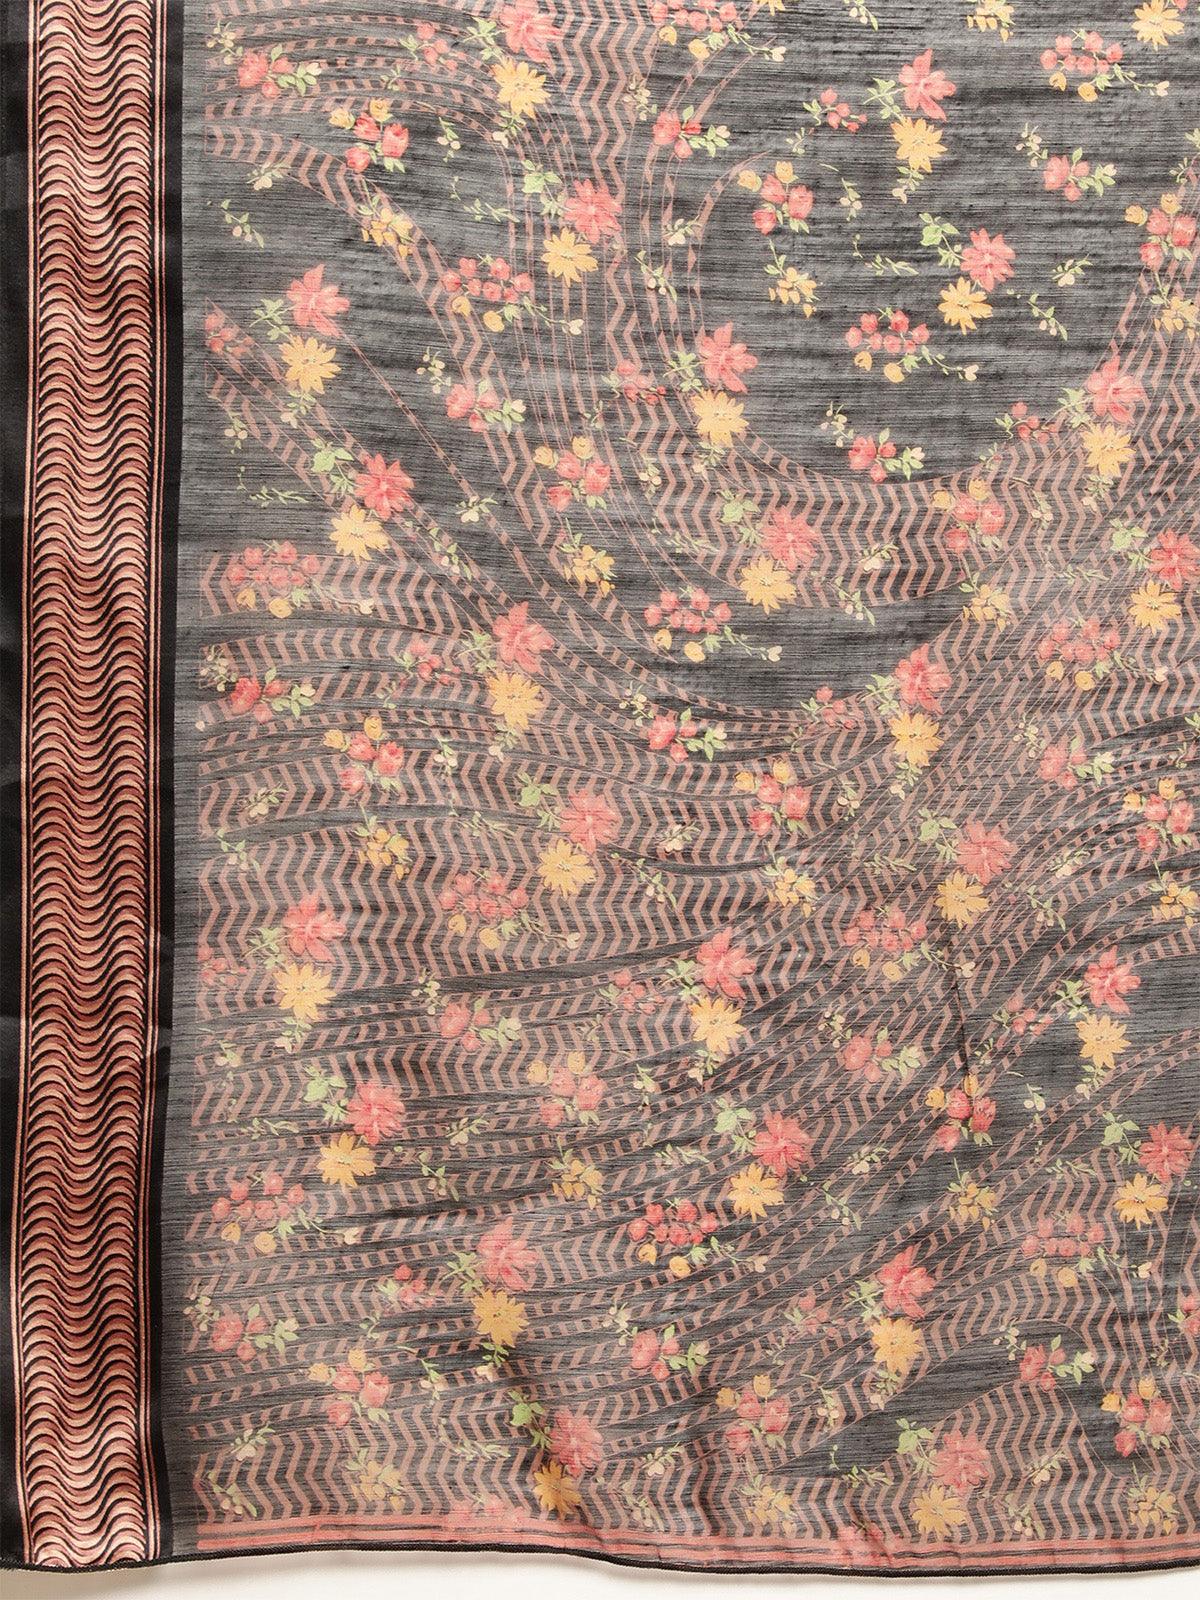 Cotton Silk Black Printed Saree With Blouse Piece - Odette